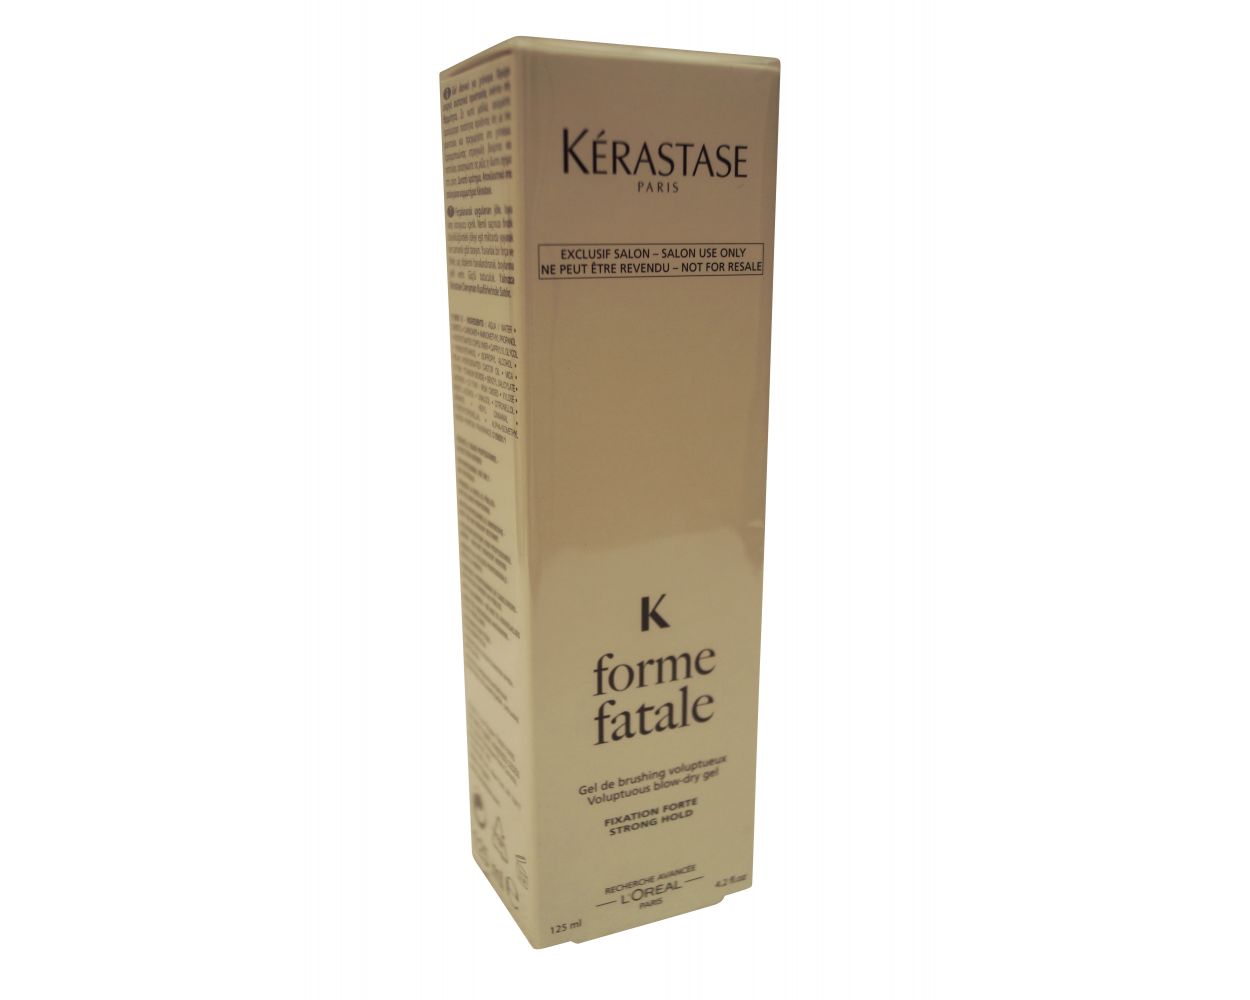 minimal Anstændig dobbelt Kerastase K Forme Fatale Salon Hair Gel | Hair Styling Products -  Beautyvice.com